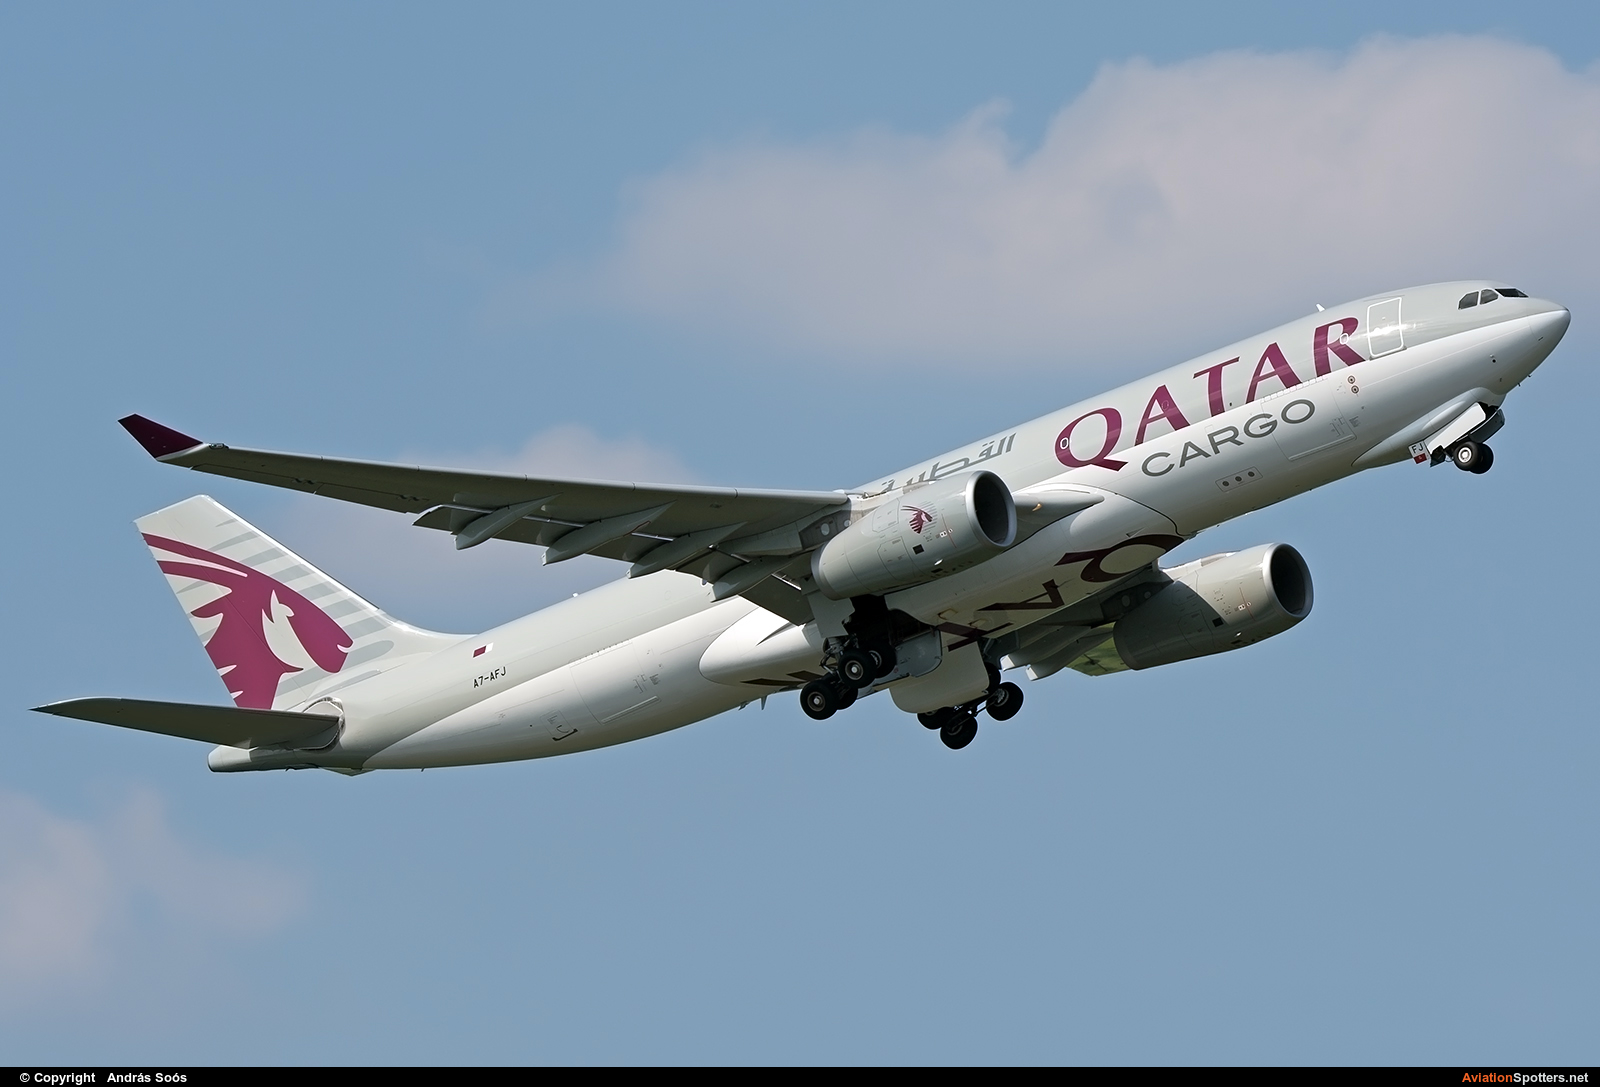 Qatar Airways Cargo  -  A330-200F  (A7-AFJ) By András Soós (sas1965)